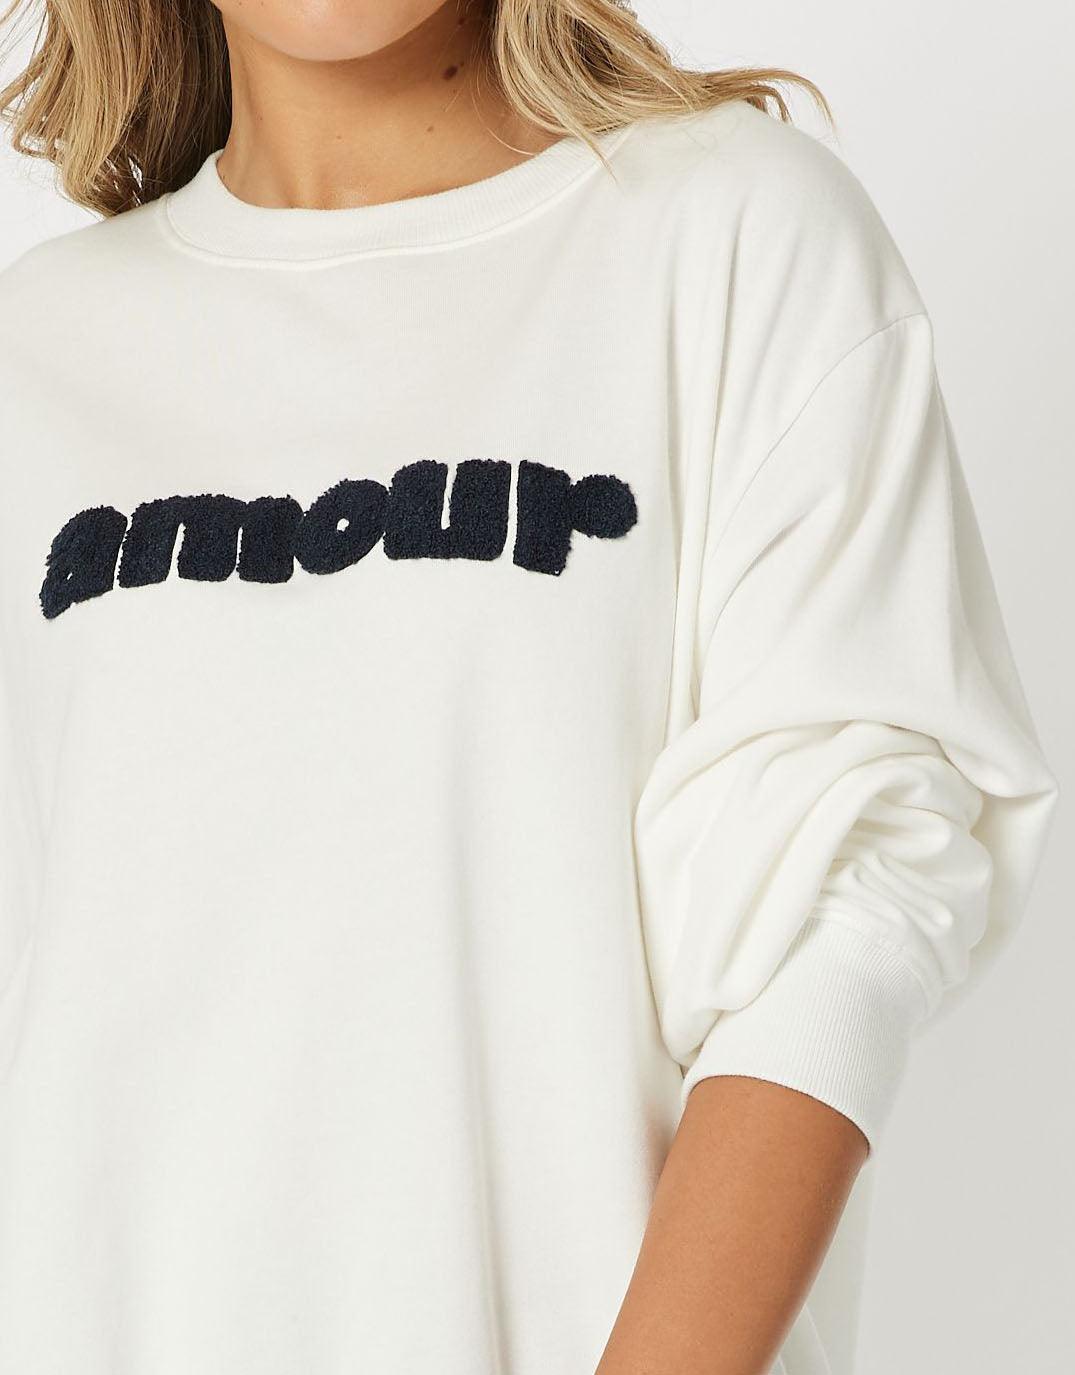 Threadz - Amour Sweatshirt - White - paulaglazebrook Jumpers